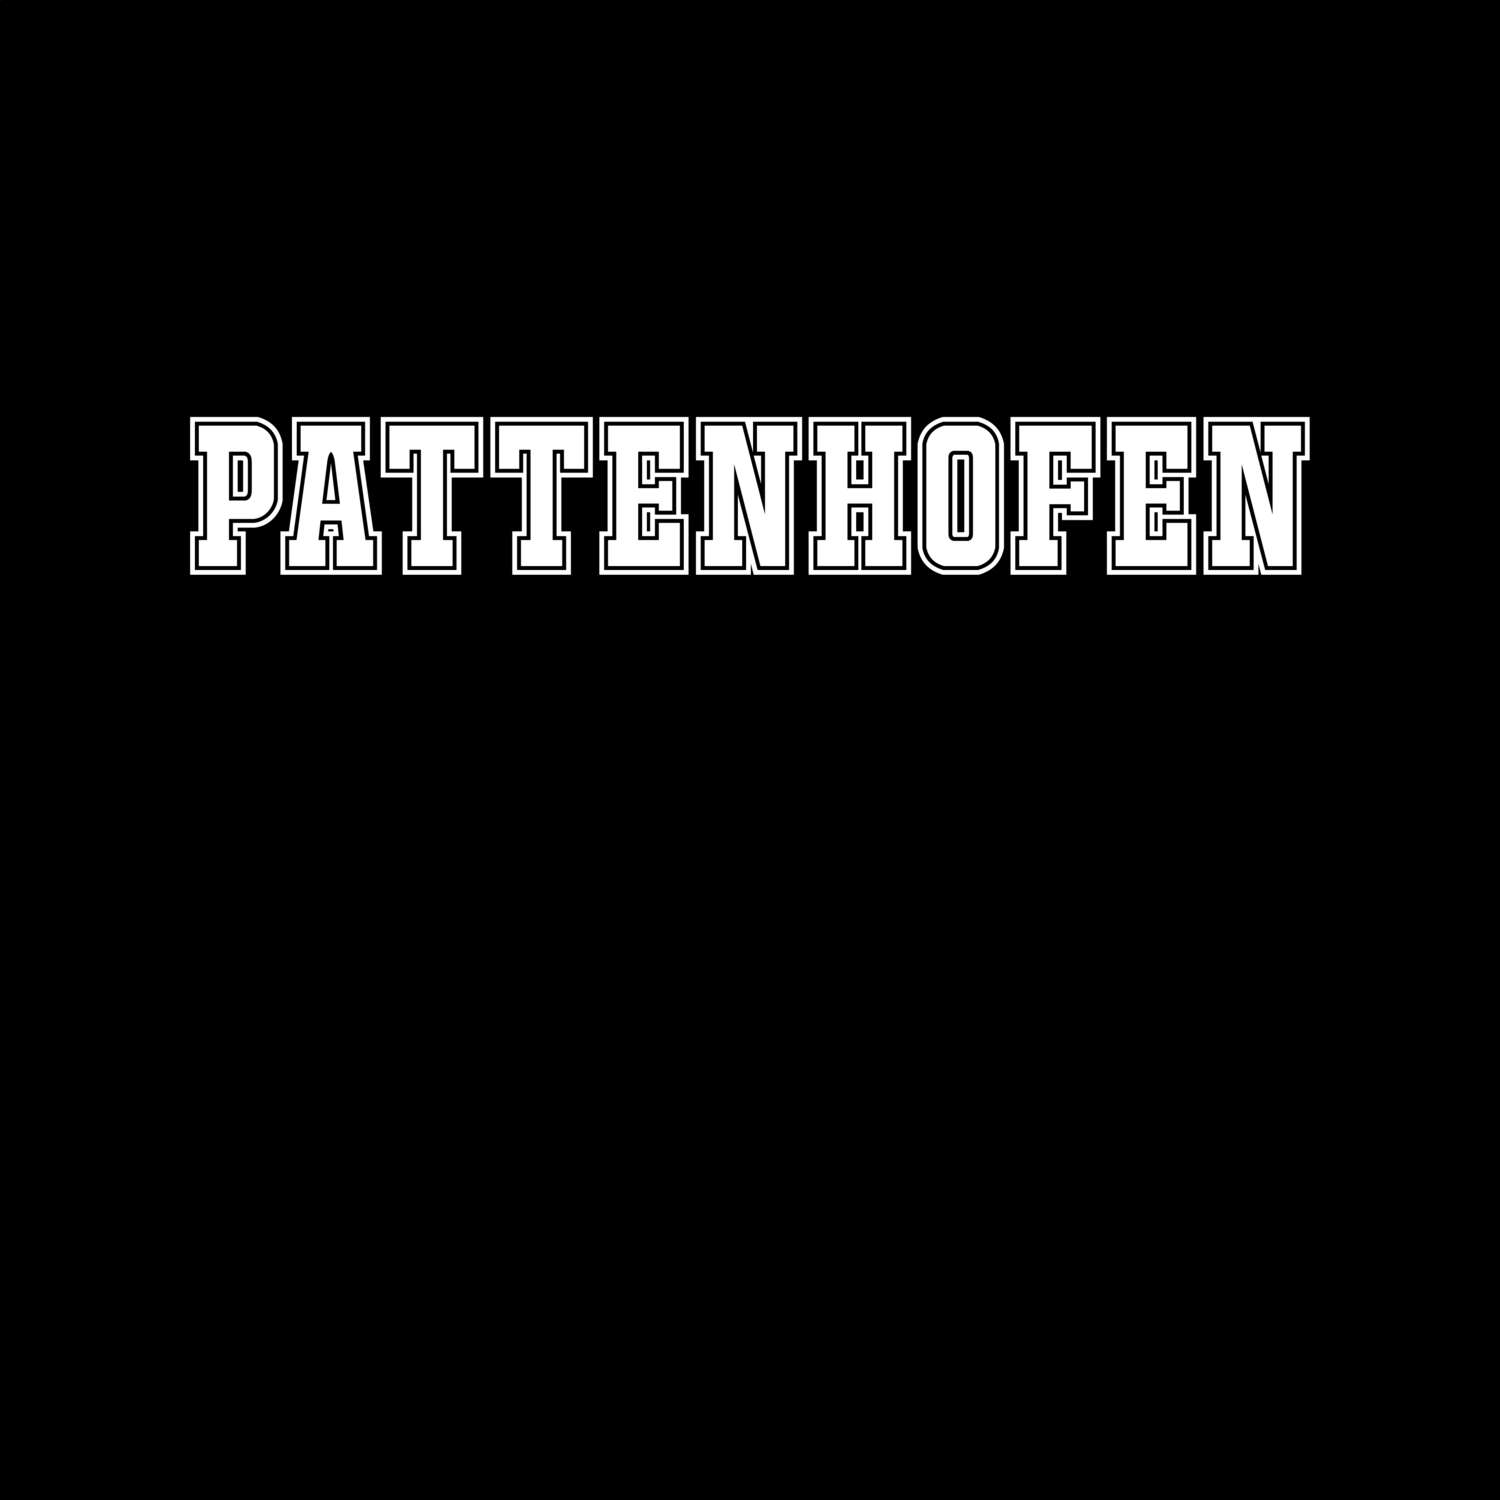 Pattenhofen T-Shirt »Classic«